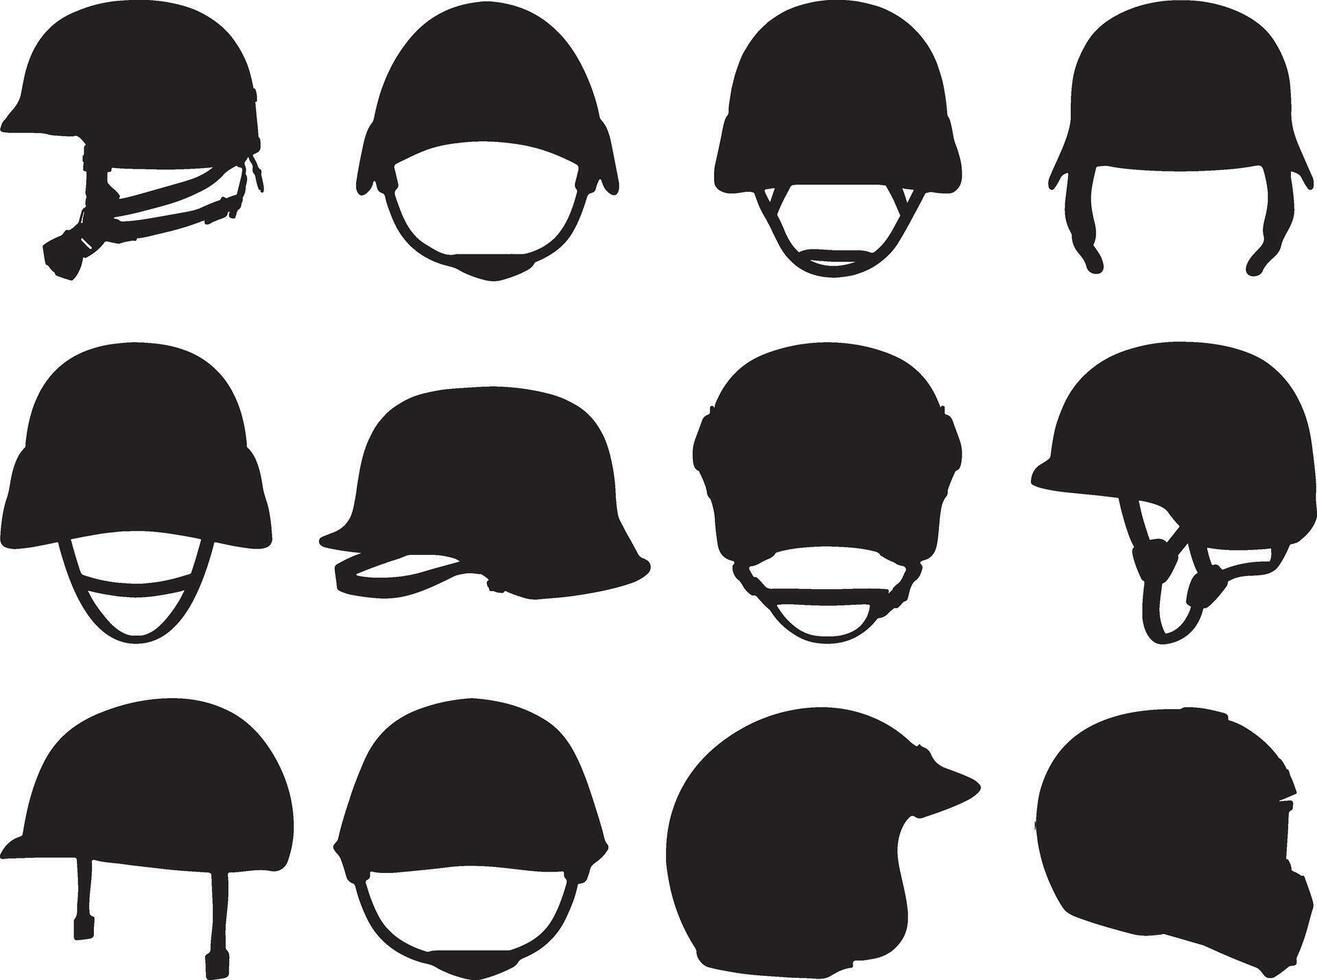 Military helmet silhouette on white background vector